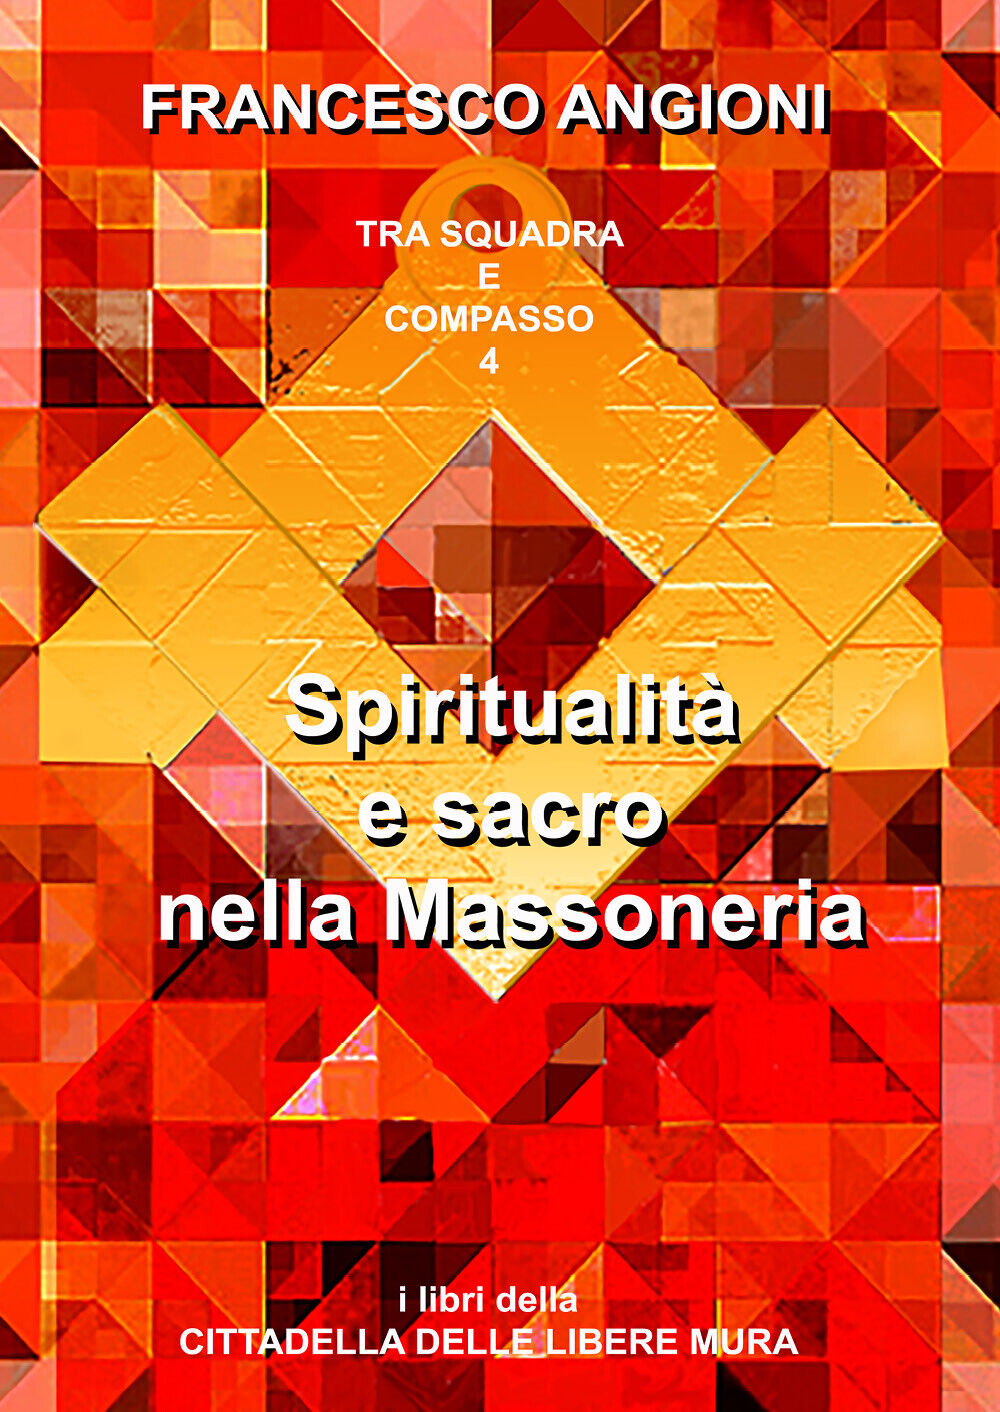 Spiritualit? e sacro nella massoneria - Francesco Angioni,  2018,  Youcanprint libro usato